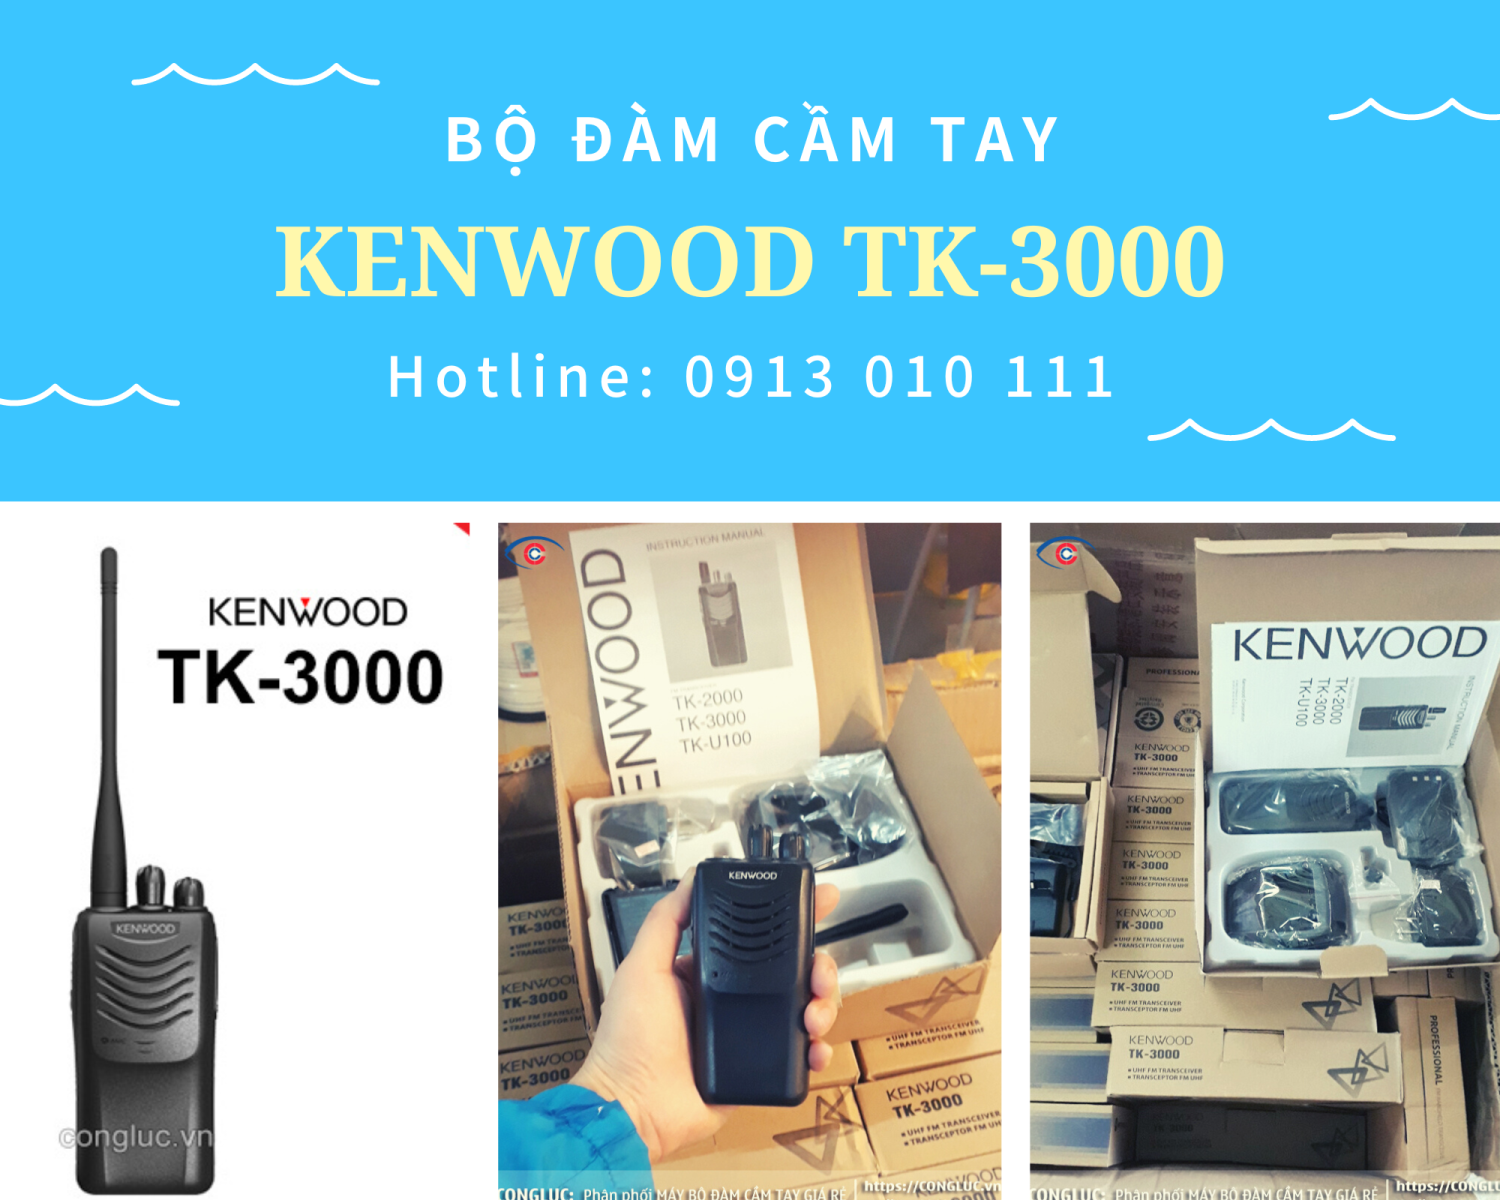 Bán máy bộ đàm cầm tay Kenwood TK-3000 giá rẻ